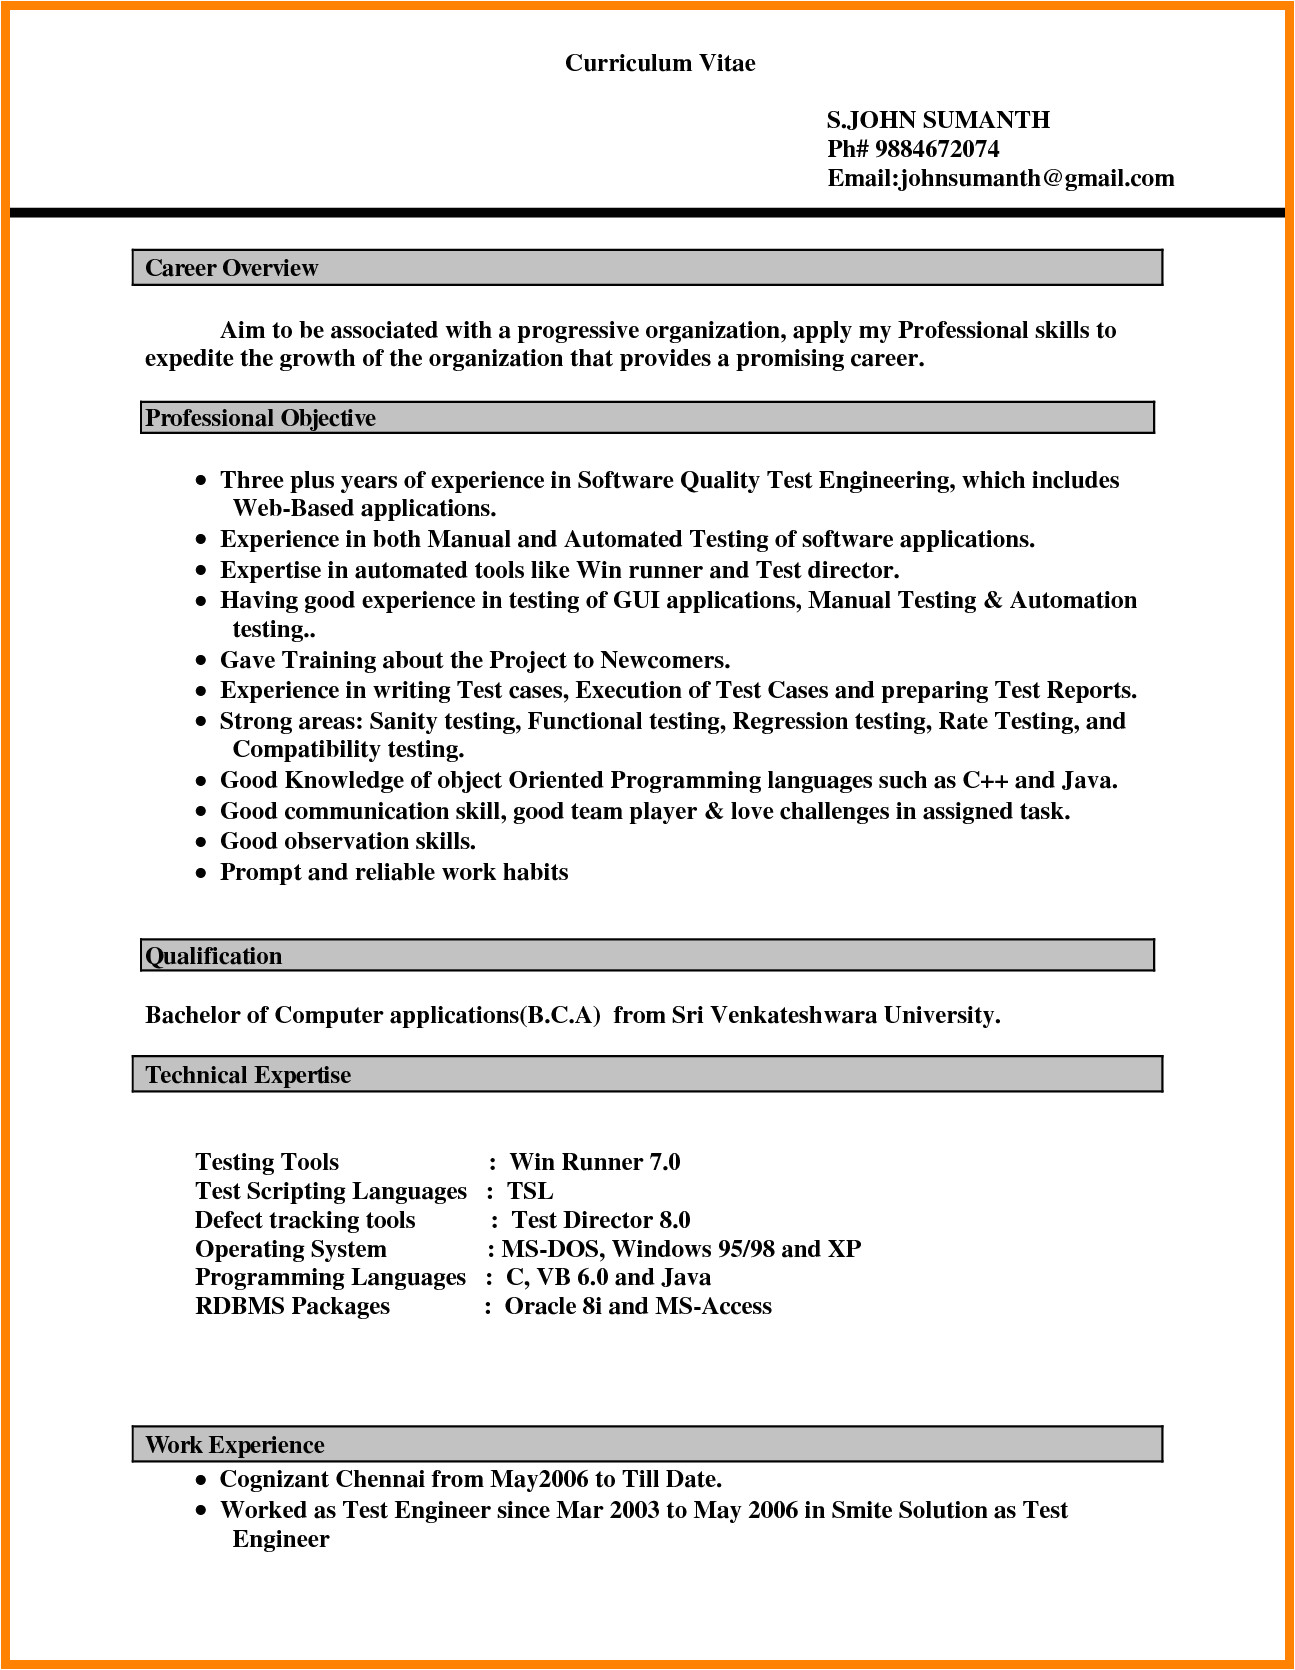 latest-resume-format-in-ms-word-williamson-ga-us